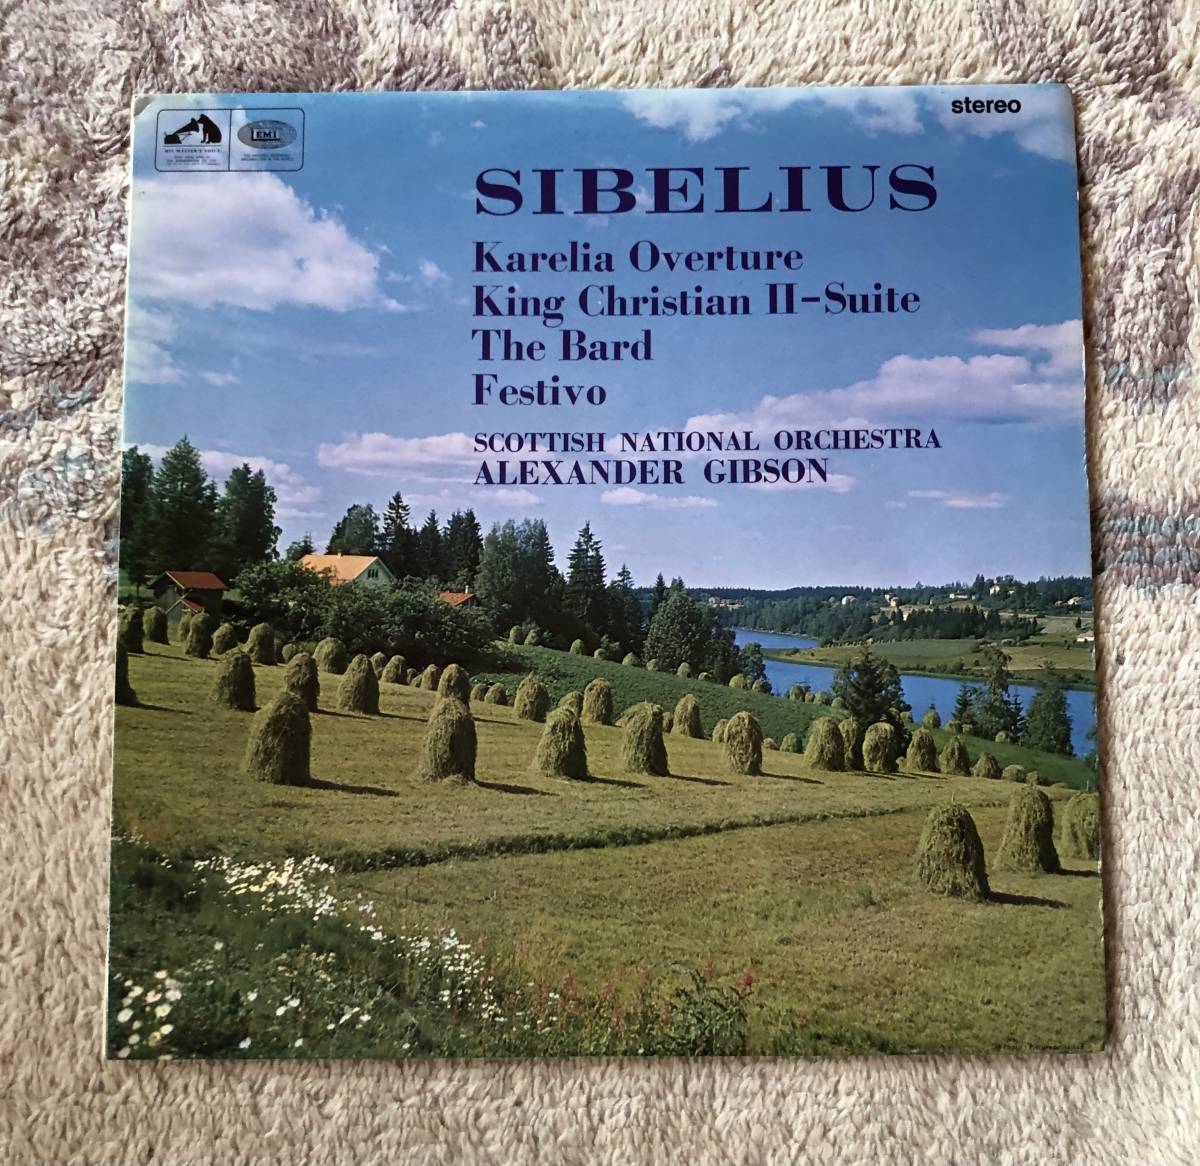 LP-Nov / 英 EMI_HMV / A.Gibson・Scottish National Orchestra / SIBELIUS_Karelia Overture, King Christian Ⅱ-Suite etc _画像1